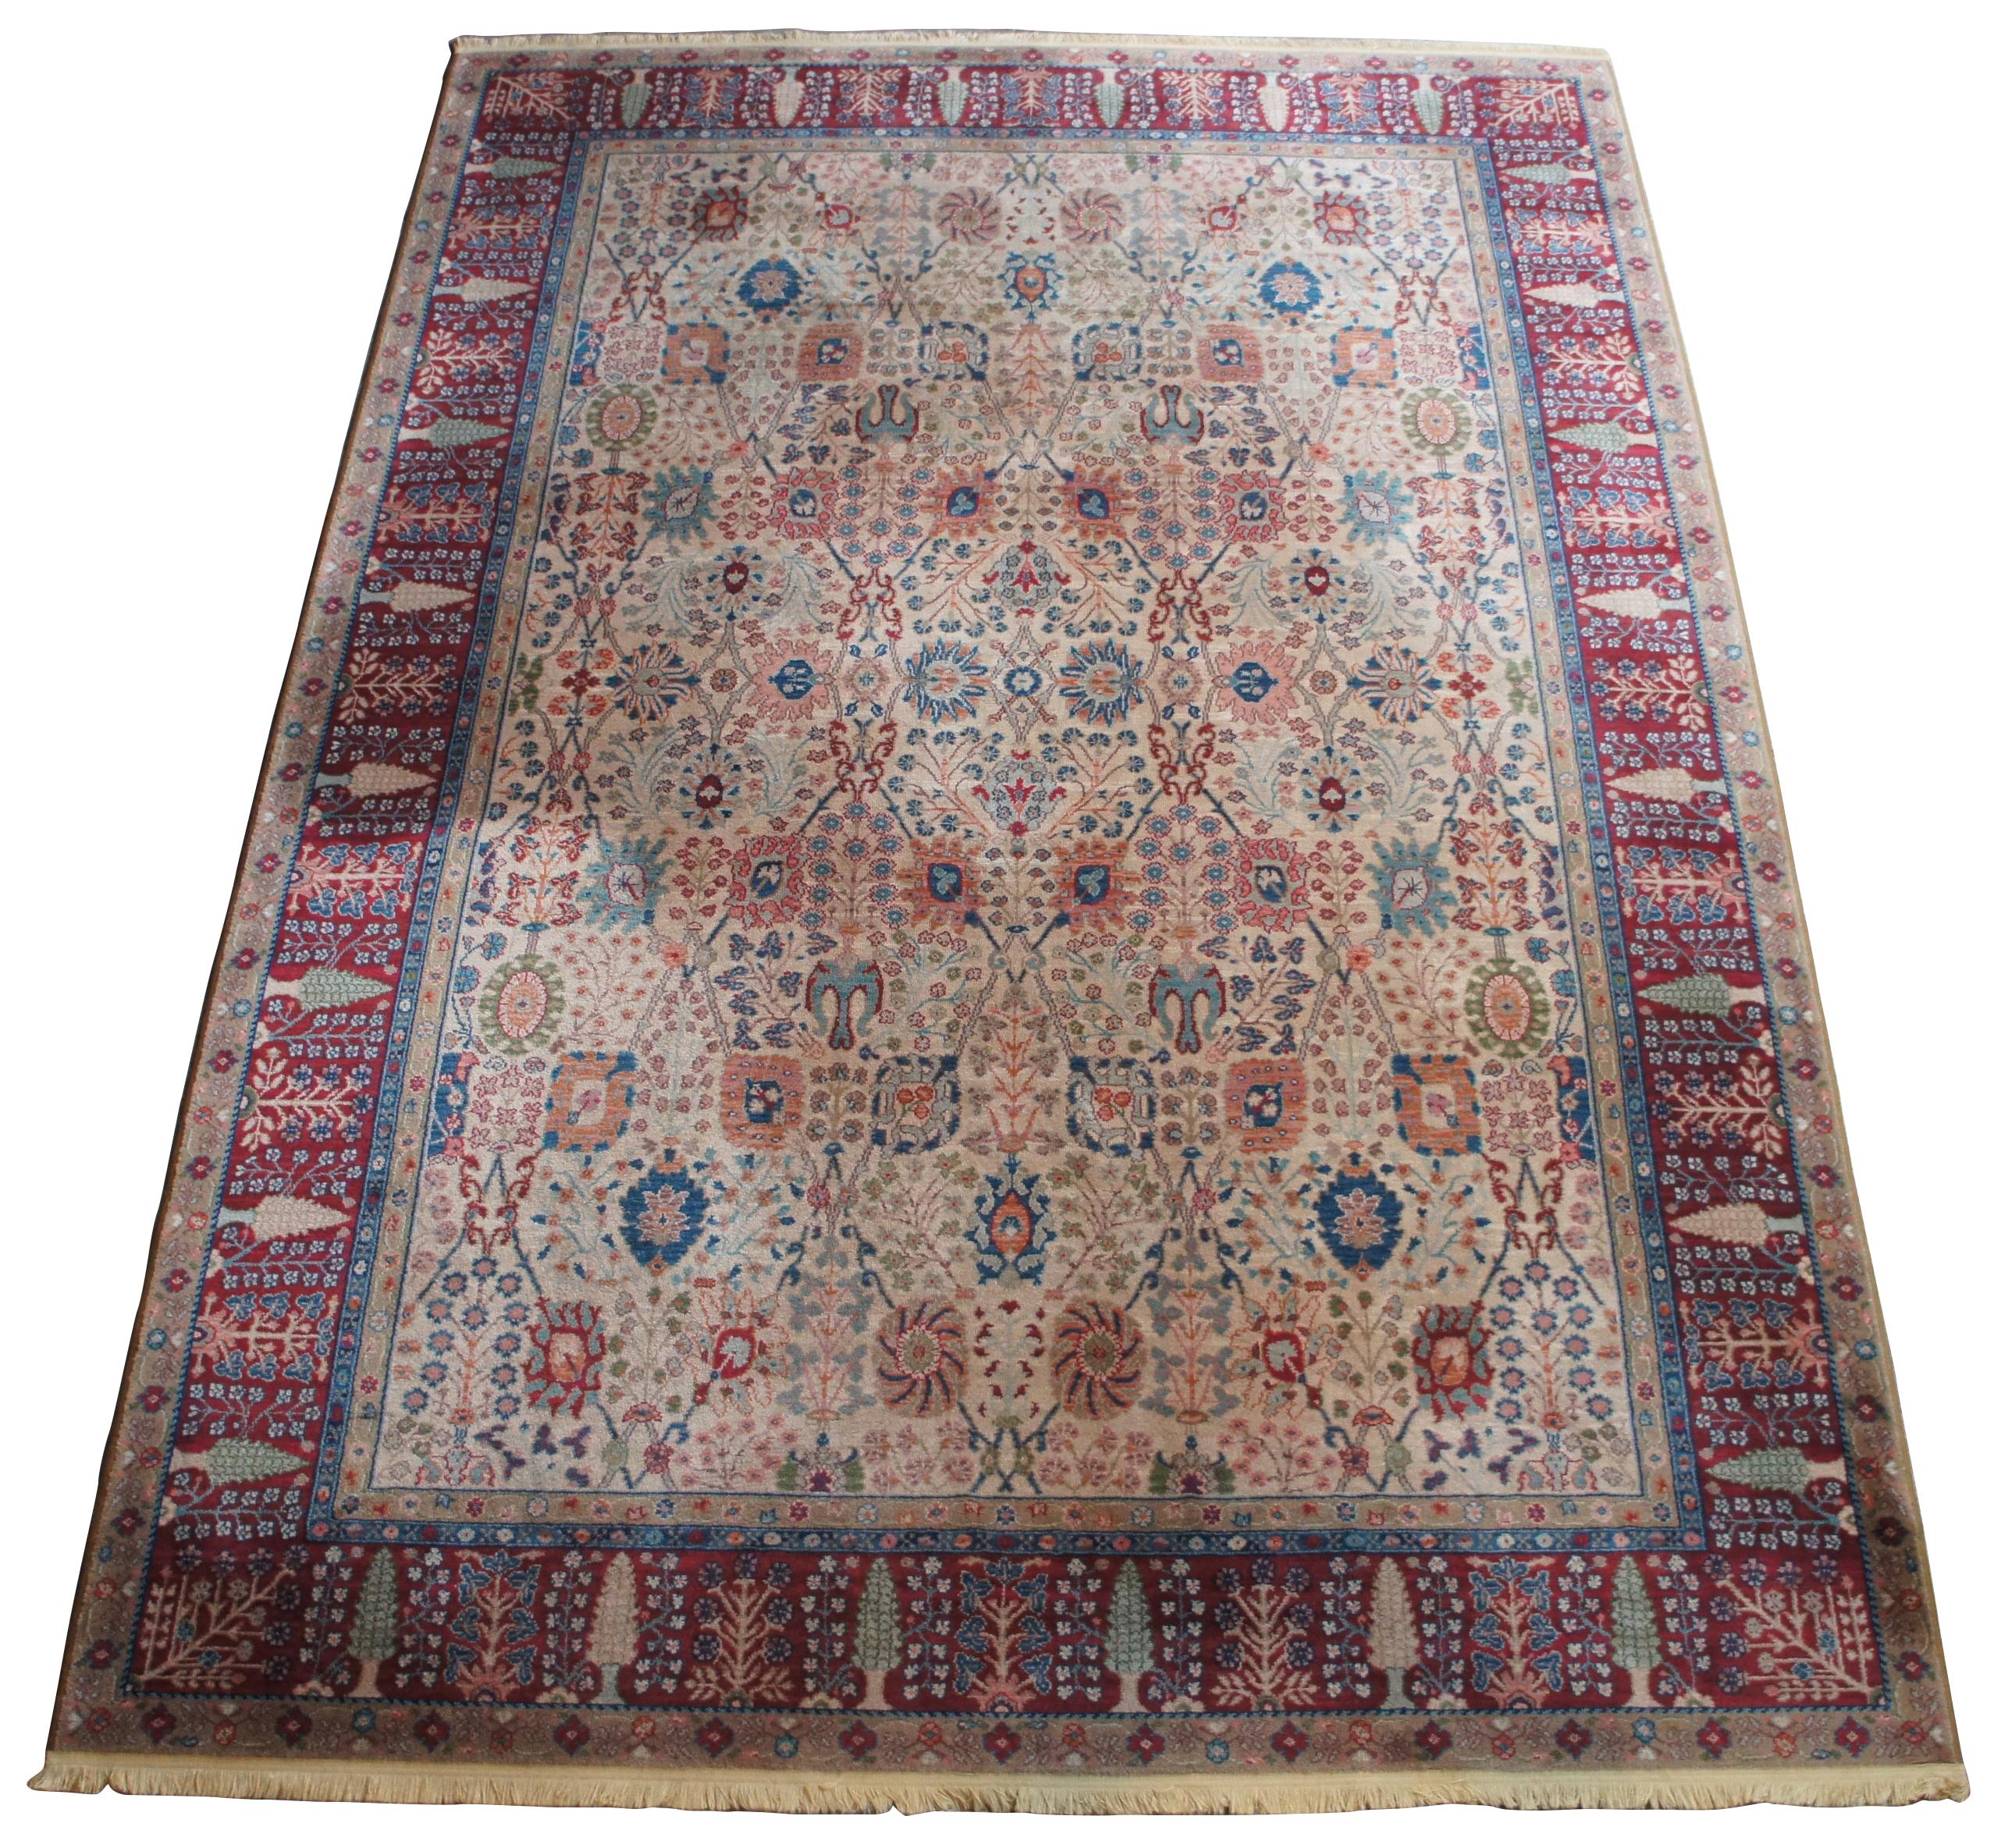 Karastan 900-901 Samovar Teawash wool carpet area rug vase design 9' x 12'.